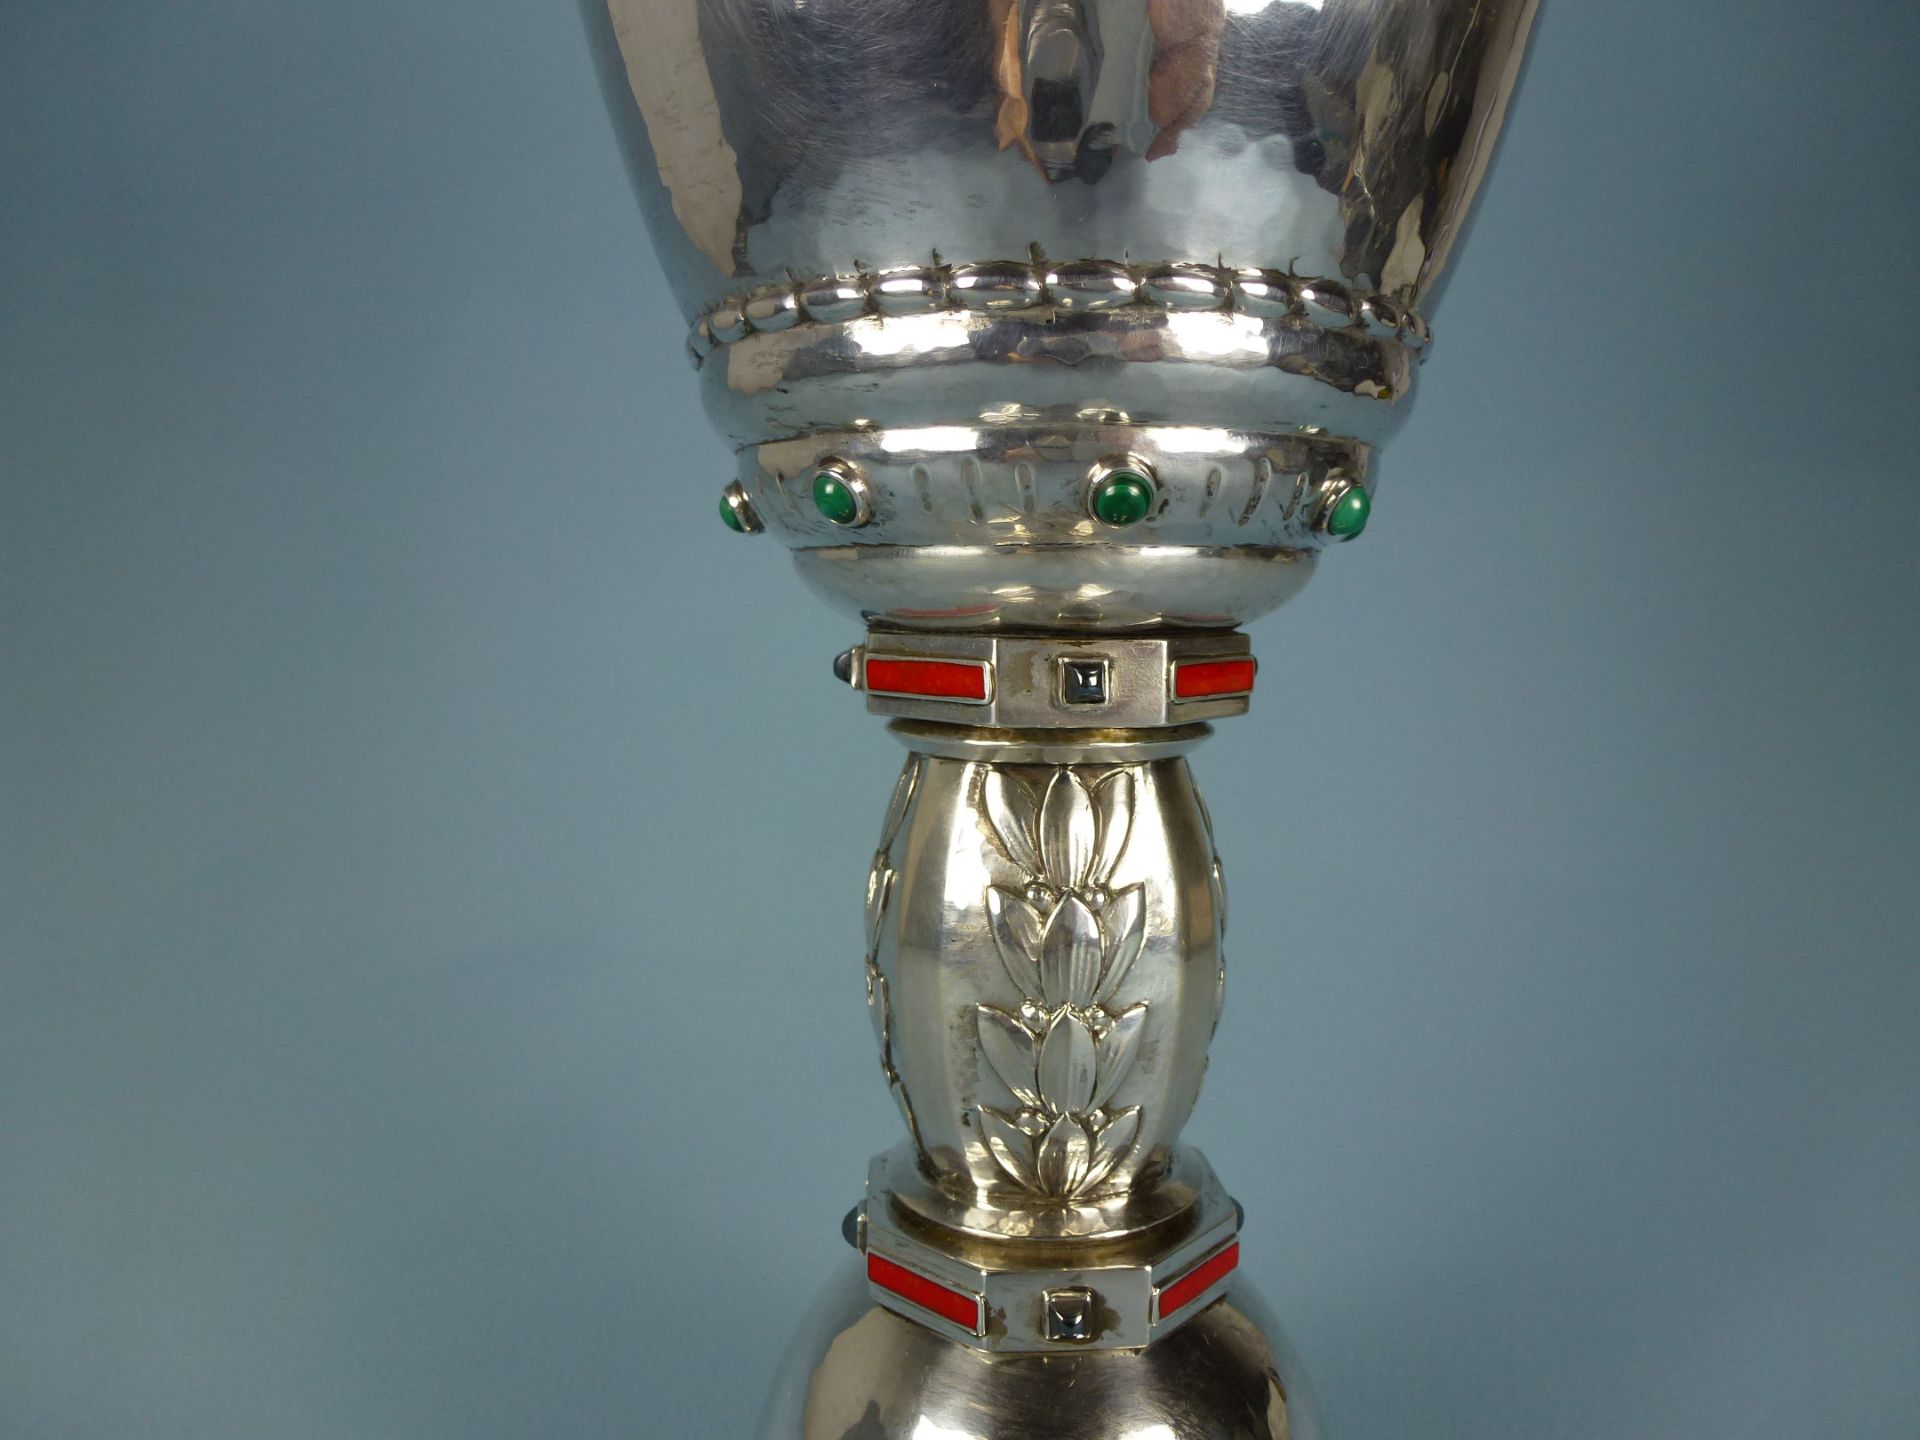 Ballonfahrt-Pokal, Gabriel Hermeling, Köln um 1910, 800er Silber - Image 4 of 8